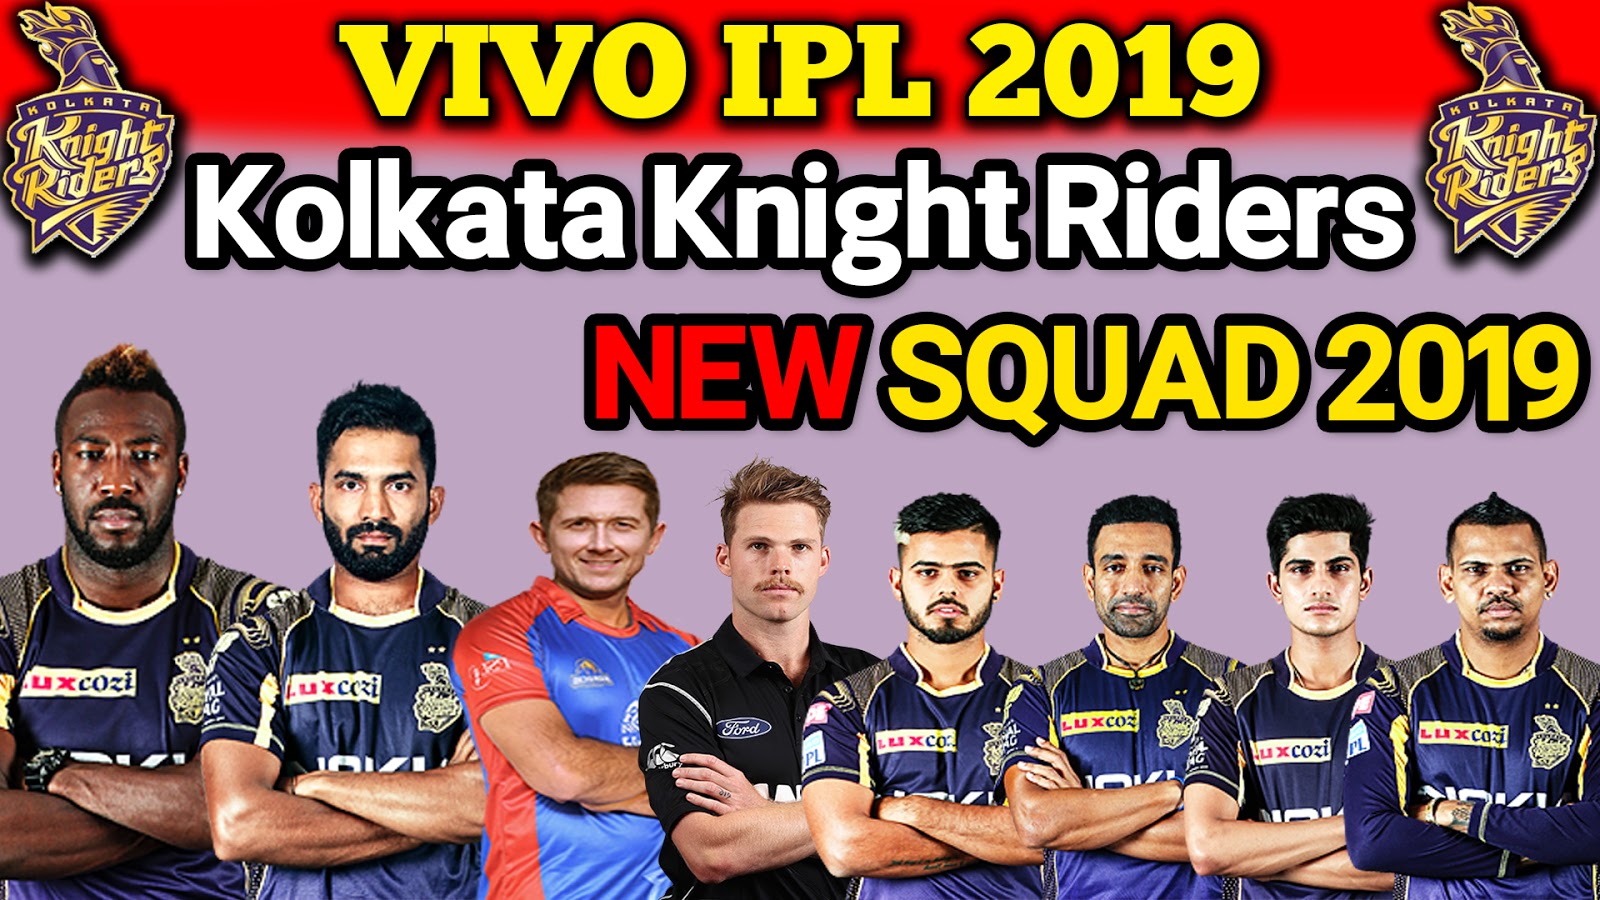 KKR Team 2019 Full Players List: कोलकाता नाइट राइडर्स टीम मैच शेड्यूल, टाइम टेबल